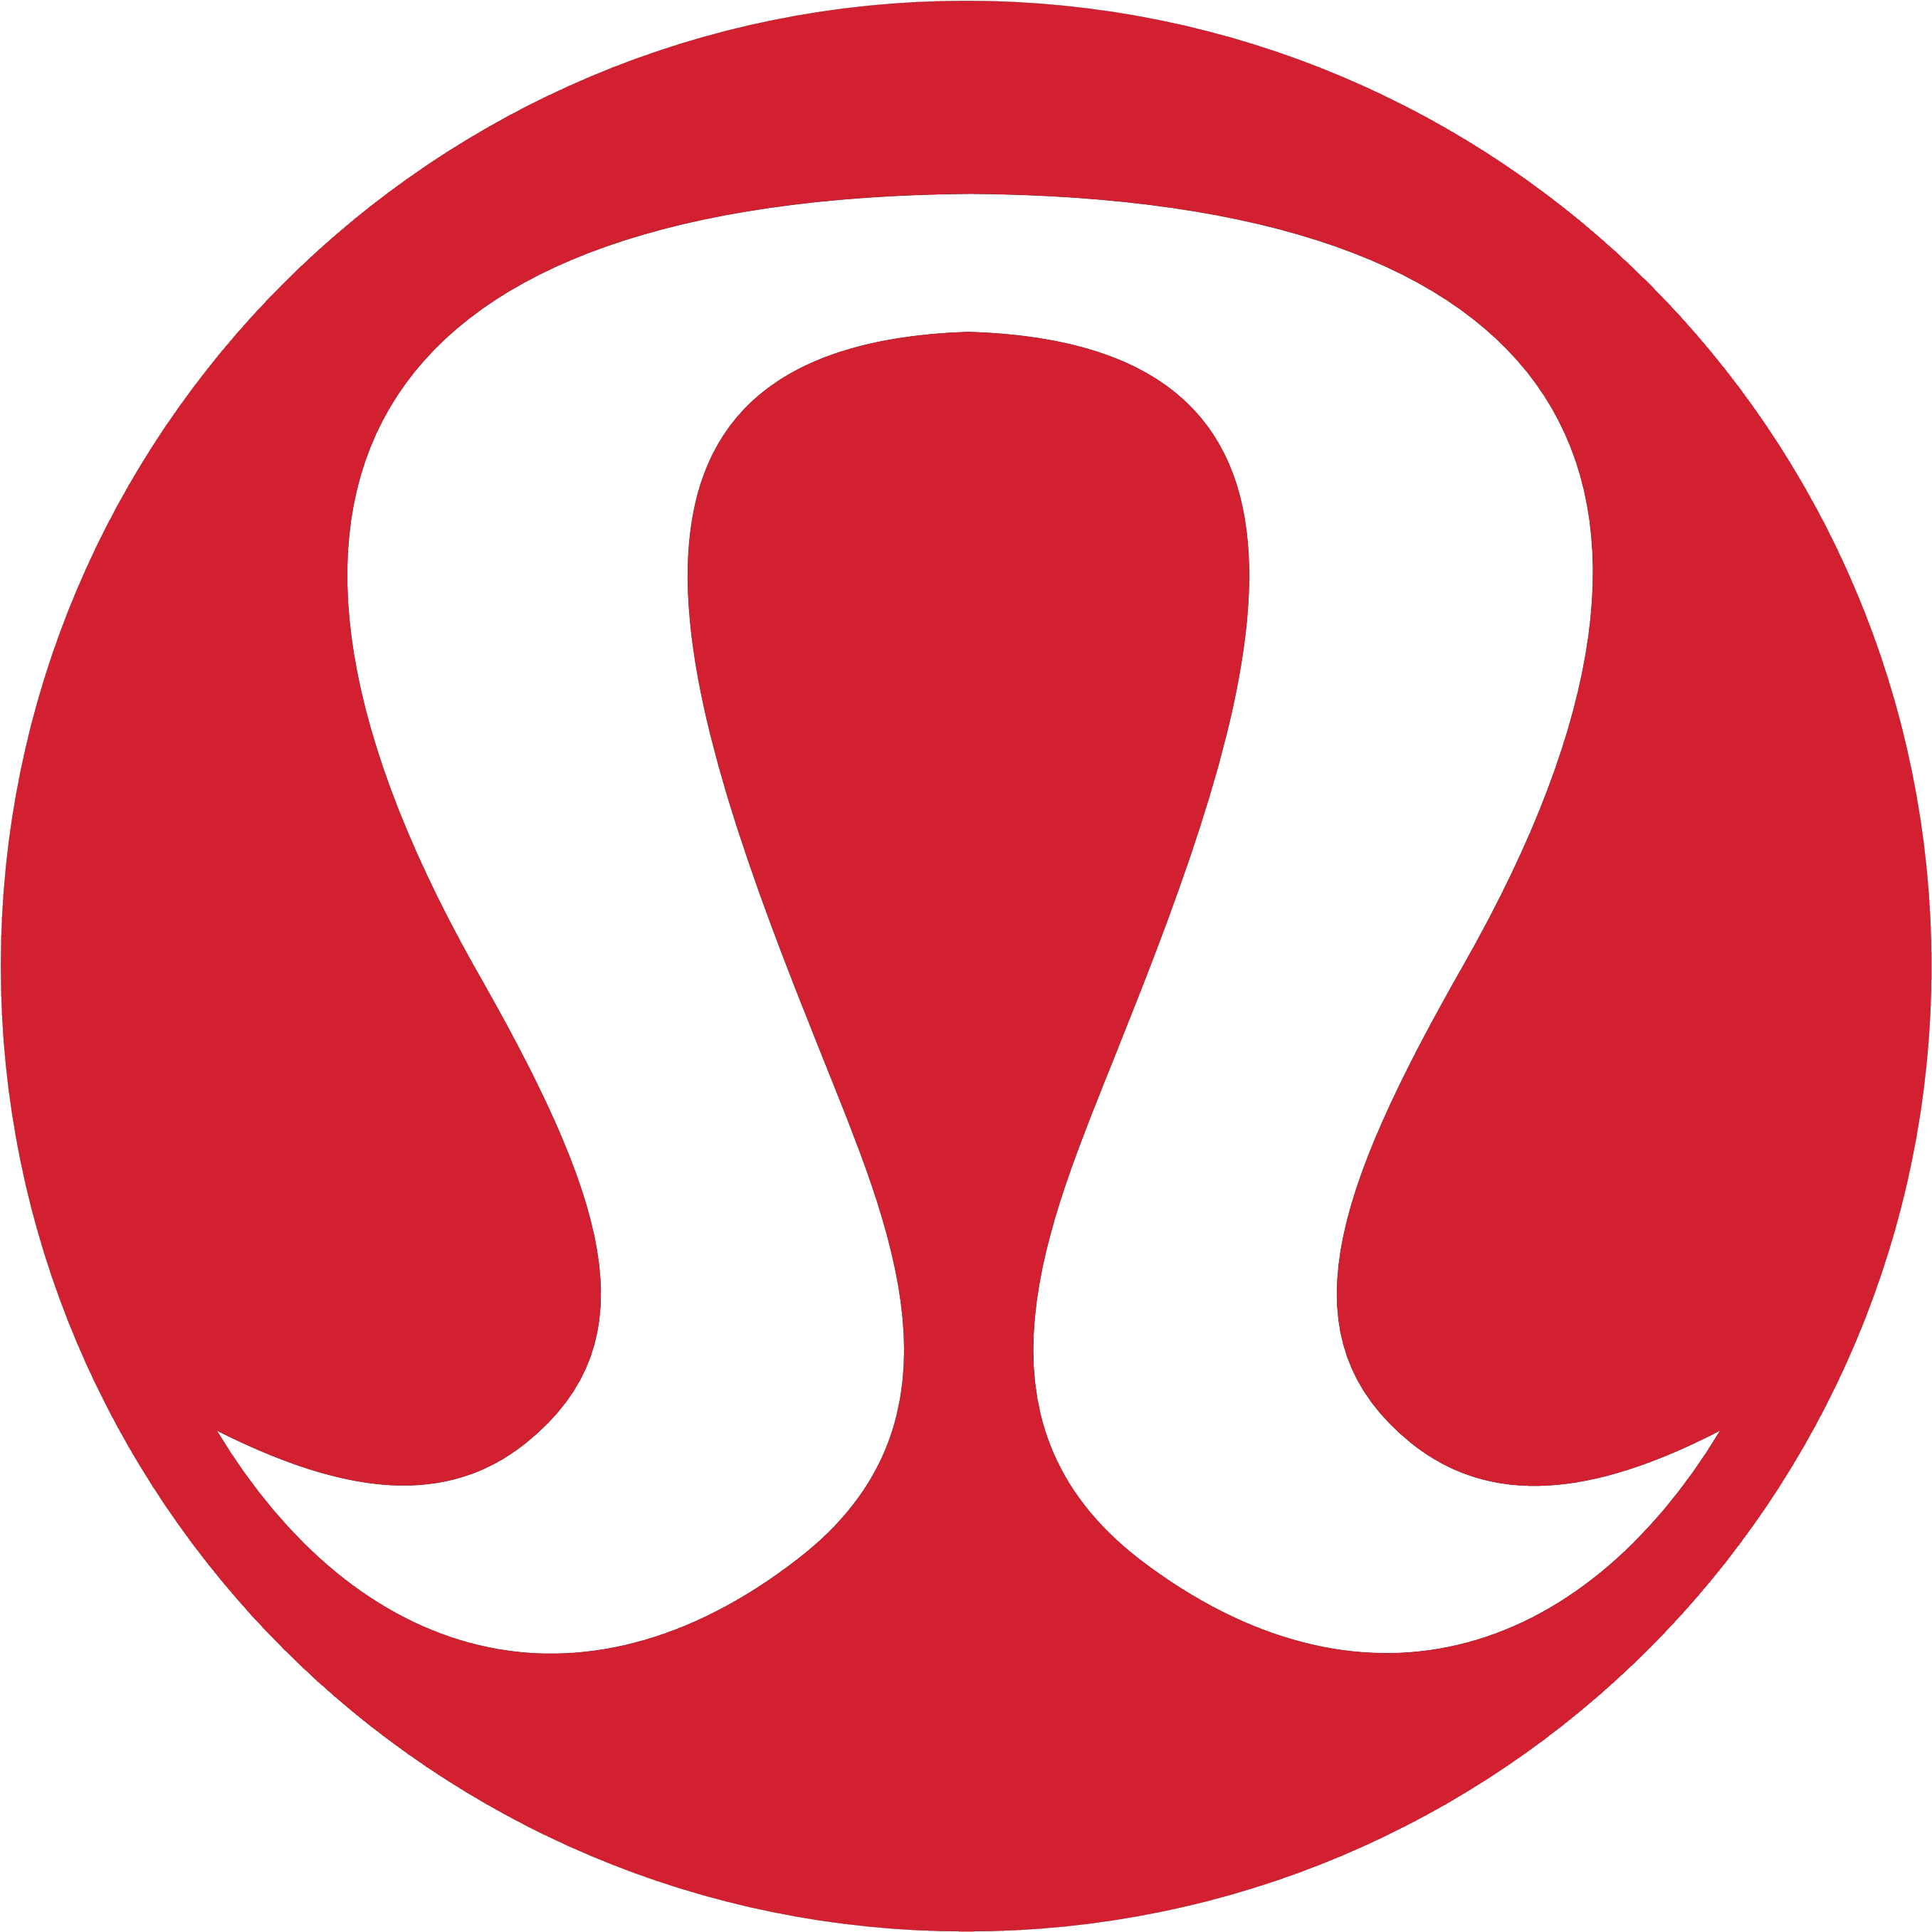 Download Lululemon Logo Gloucester Road Tube Station Png Image With No Background Pngkey Com